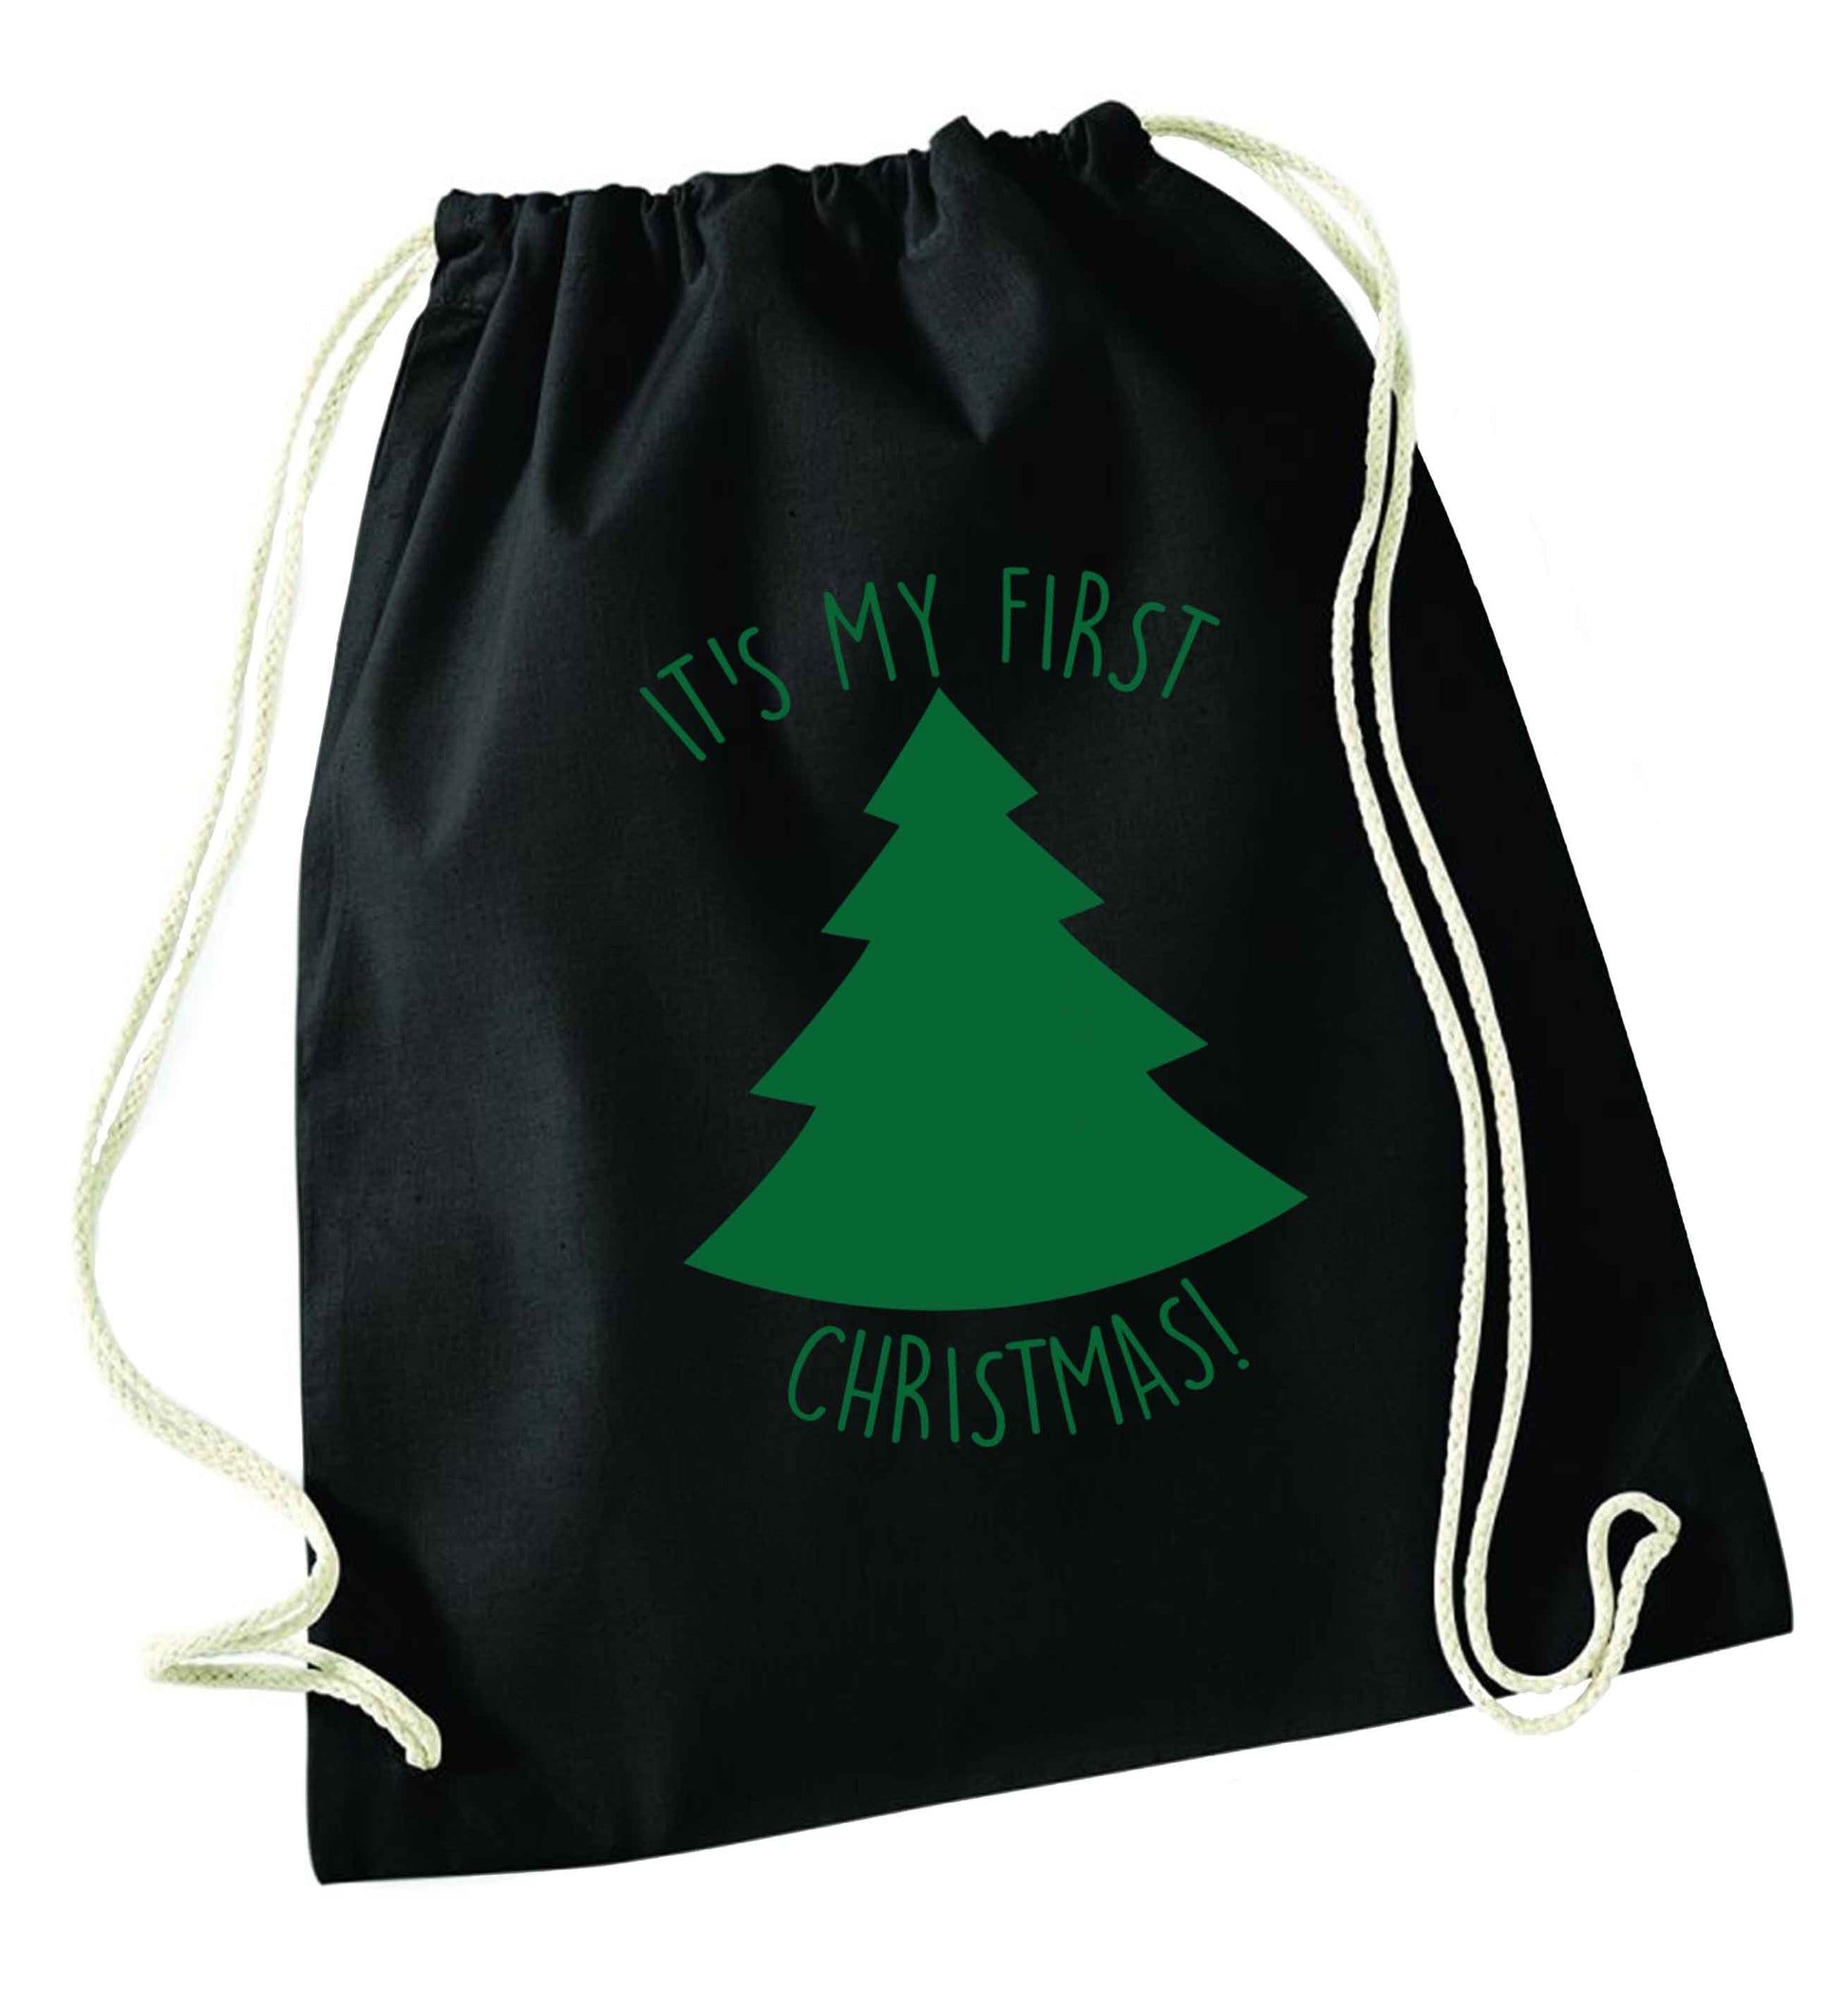 It's my first Christmas - tree black drawstring bag